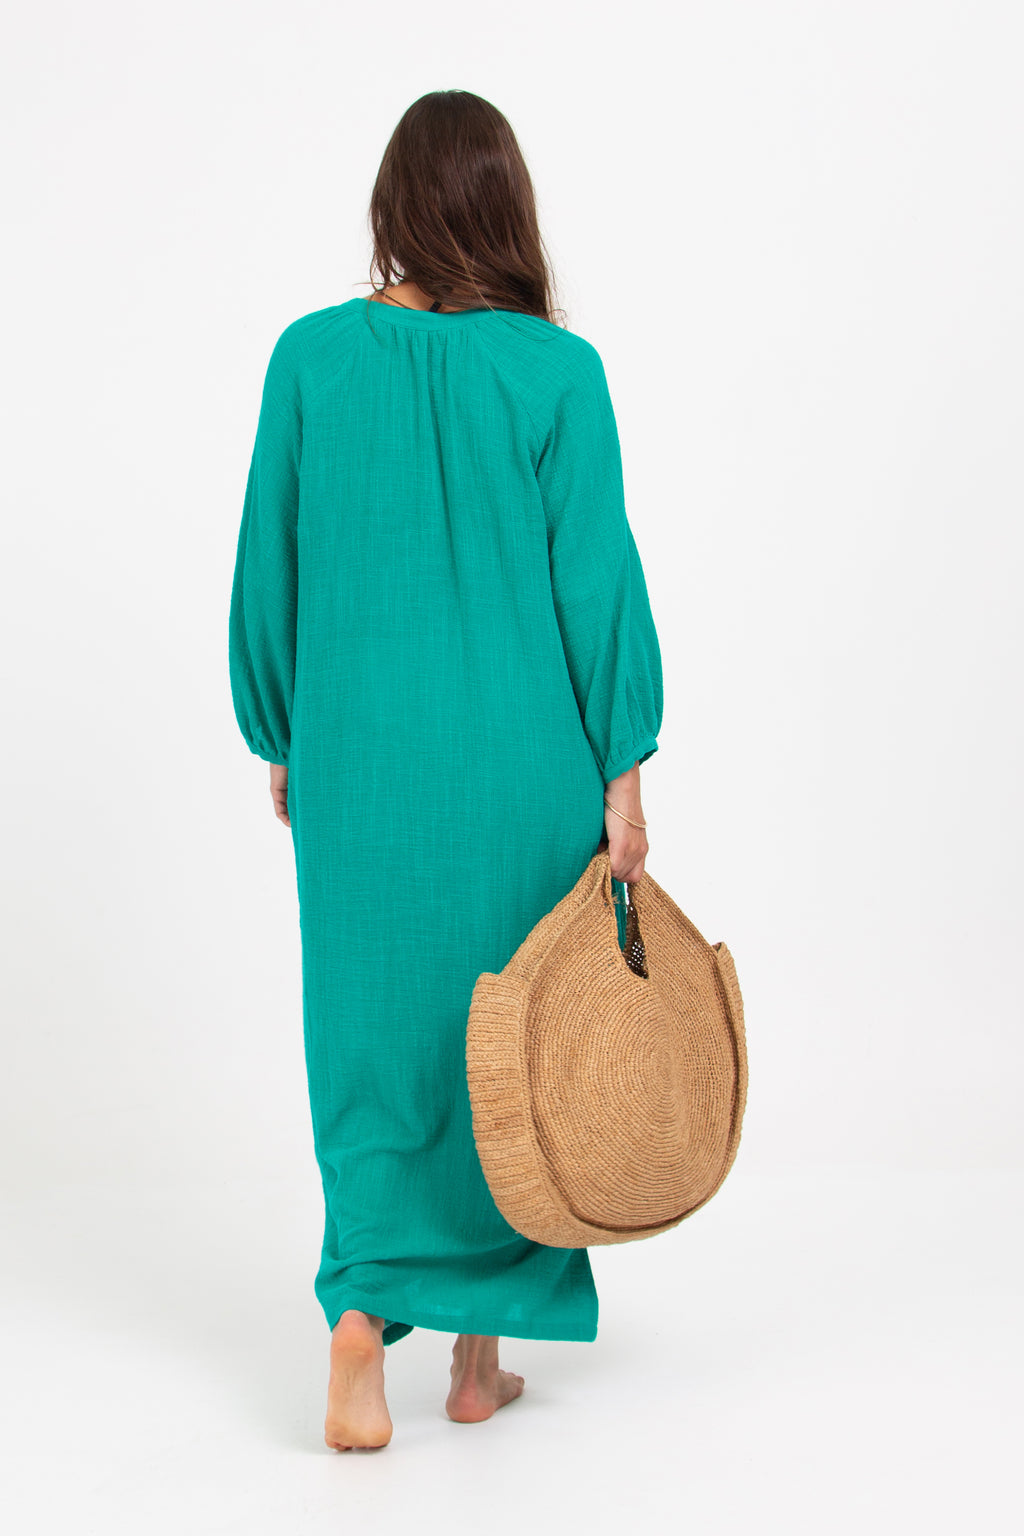 Claudette long emerald dress